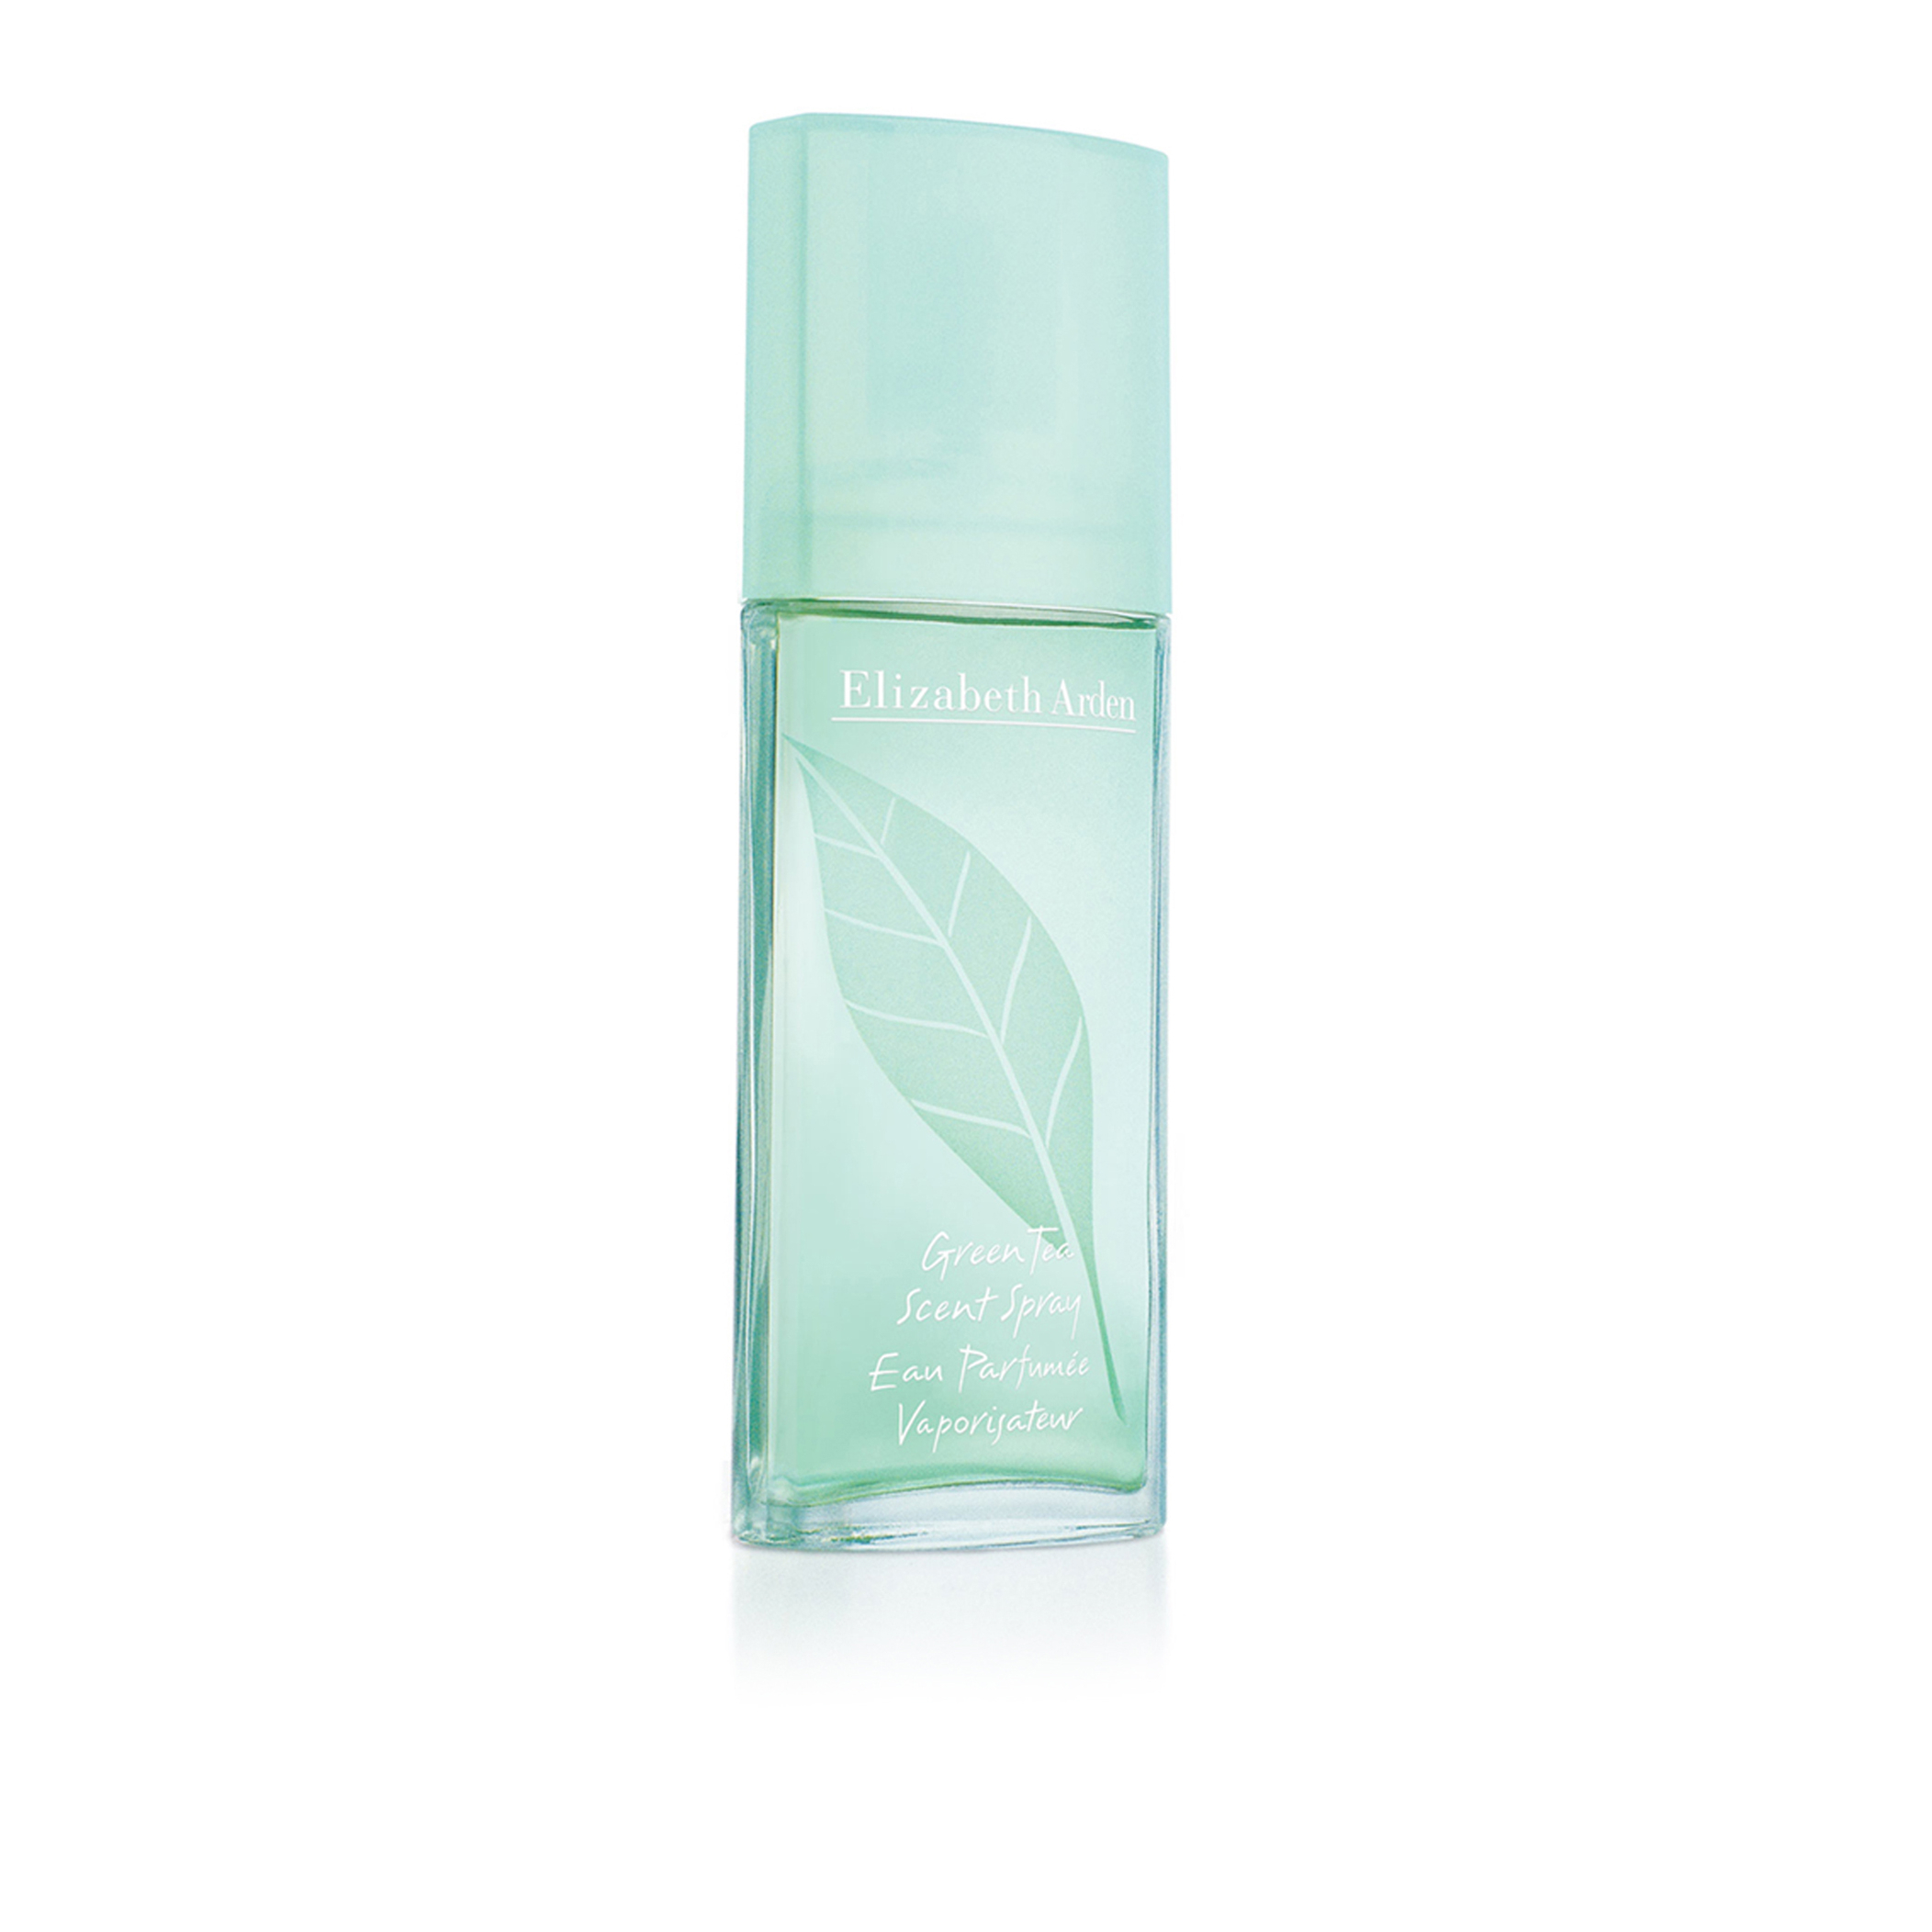 Elizabeth Arden Green Tea Perfume Spray for Women, 3.4 Oz - image 2 of 3